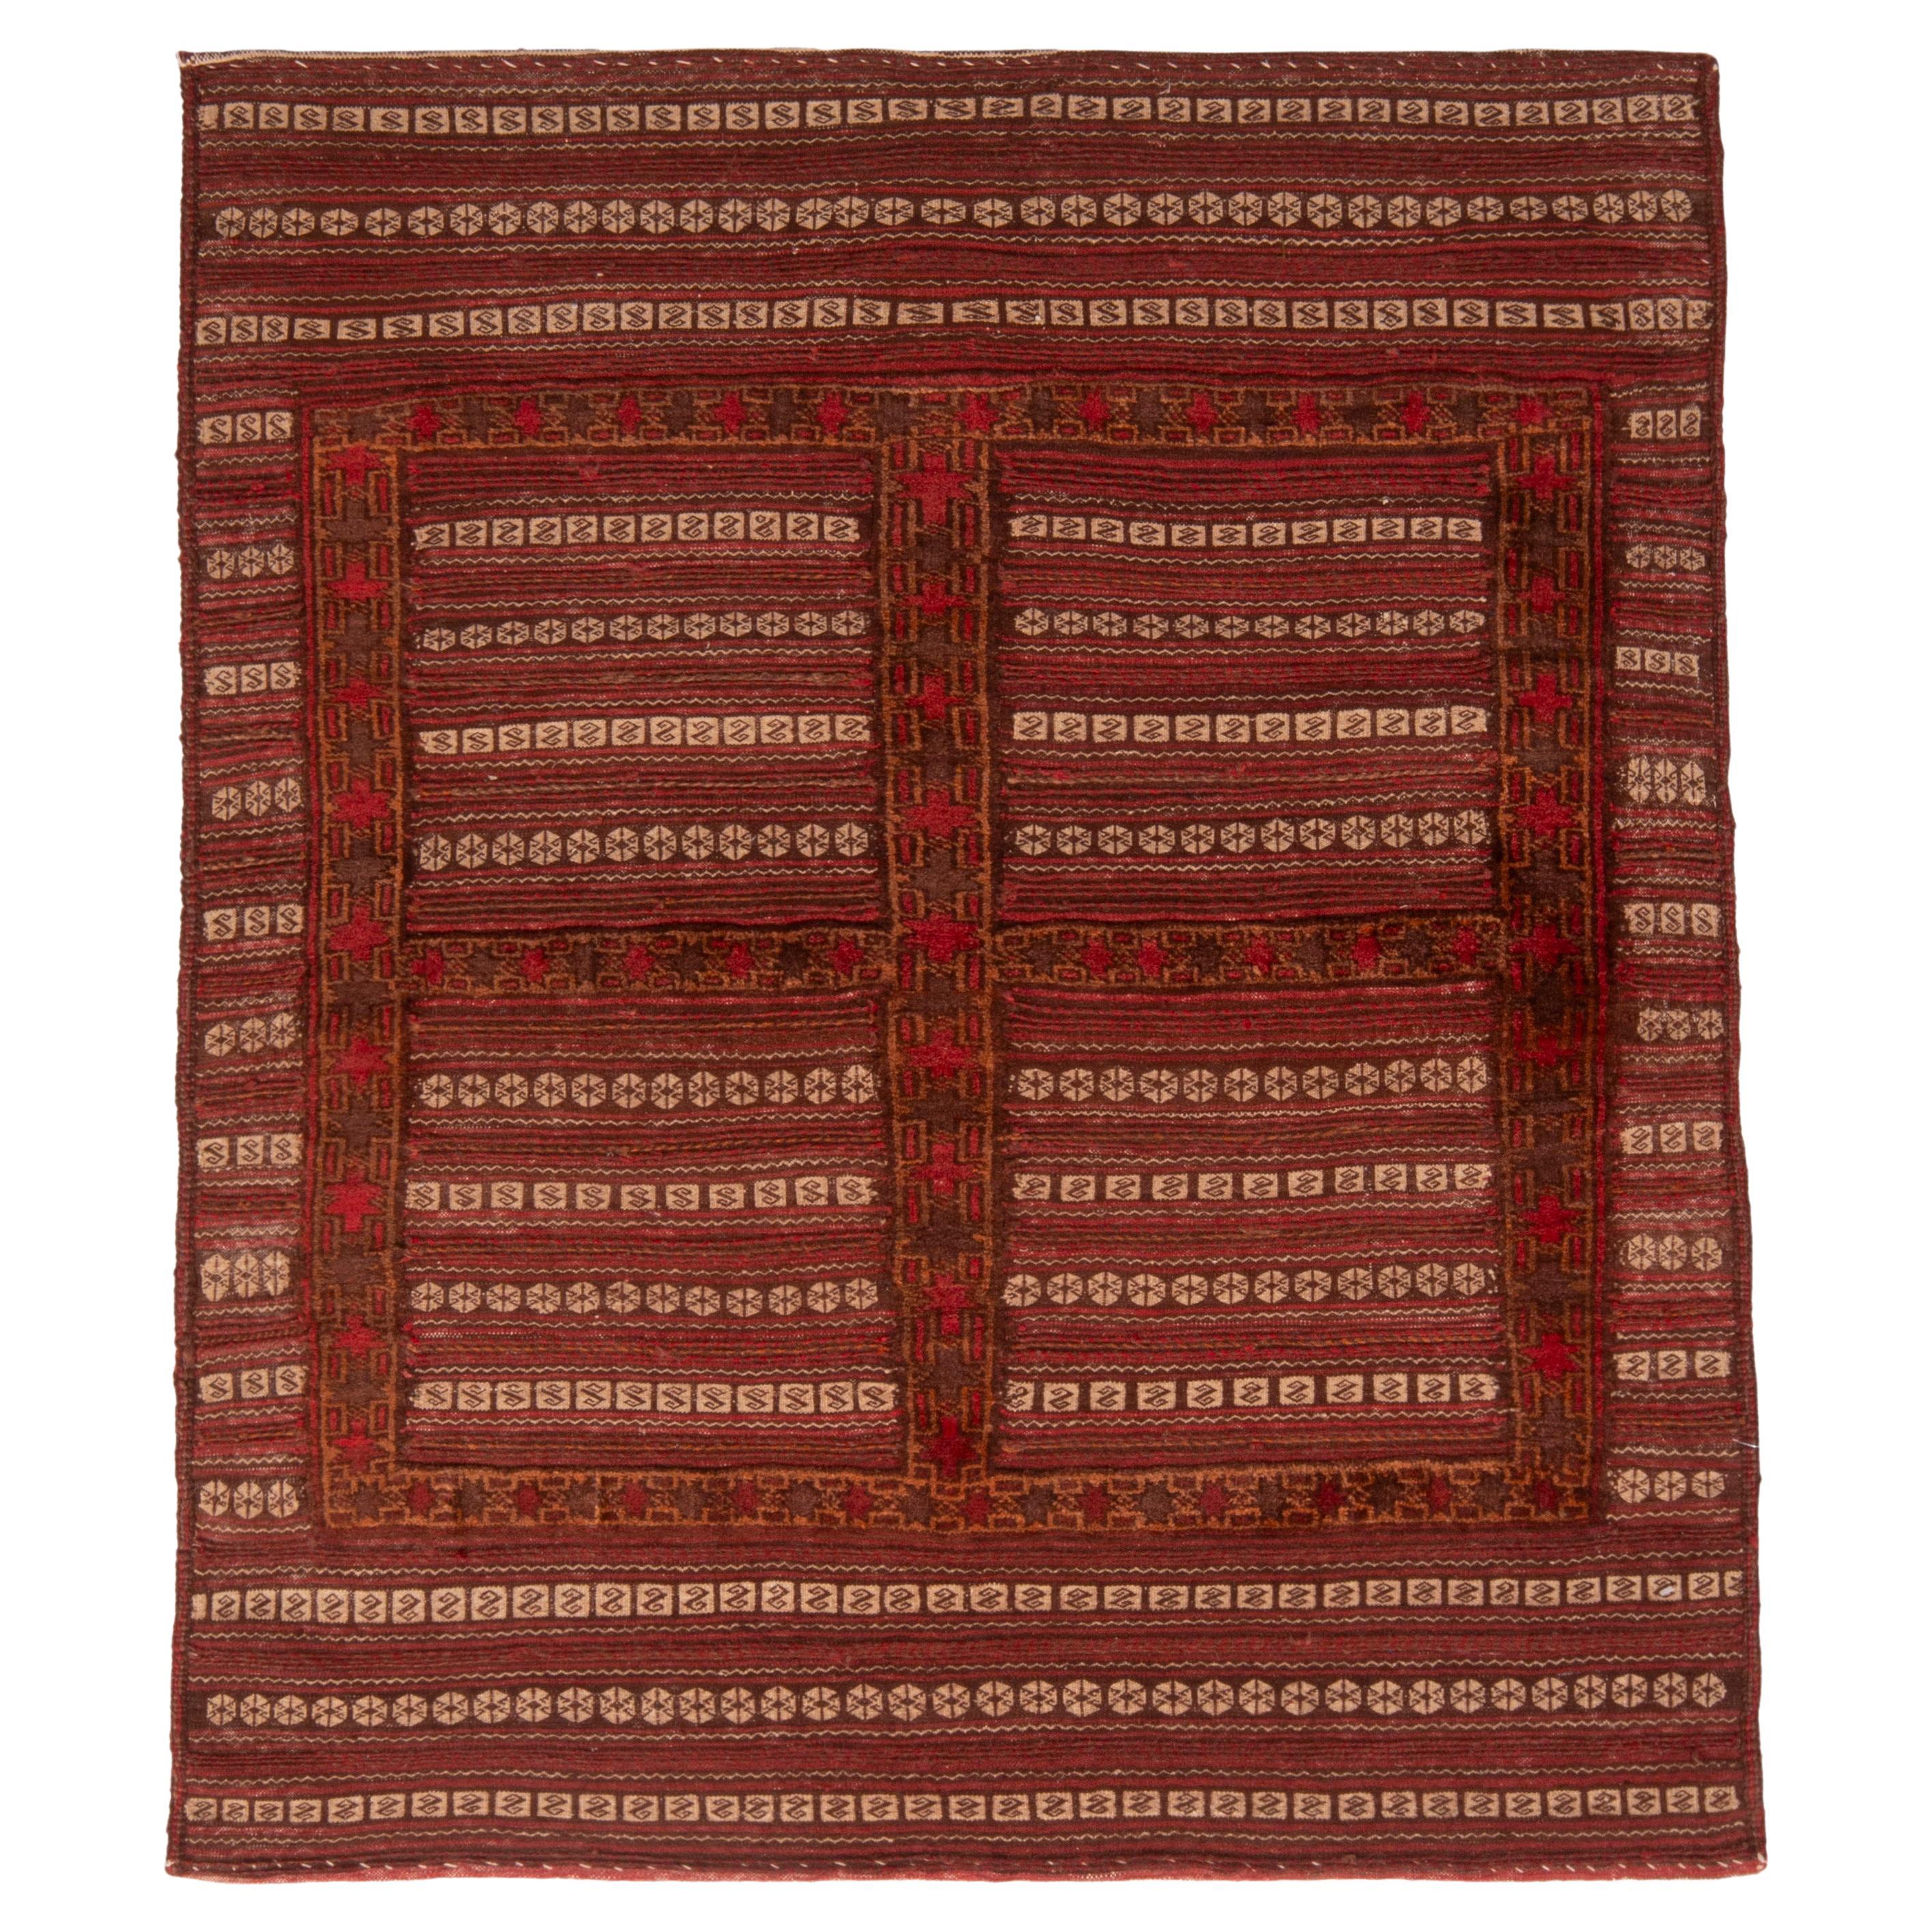 Antique Geometric Red and Brown Wool Kilim Rug by Rug & Kilim